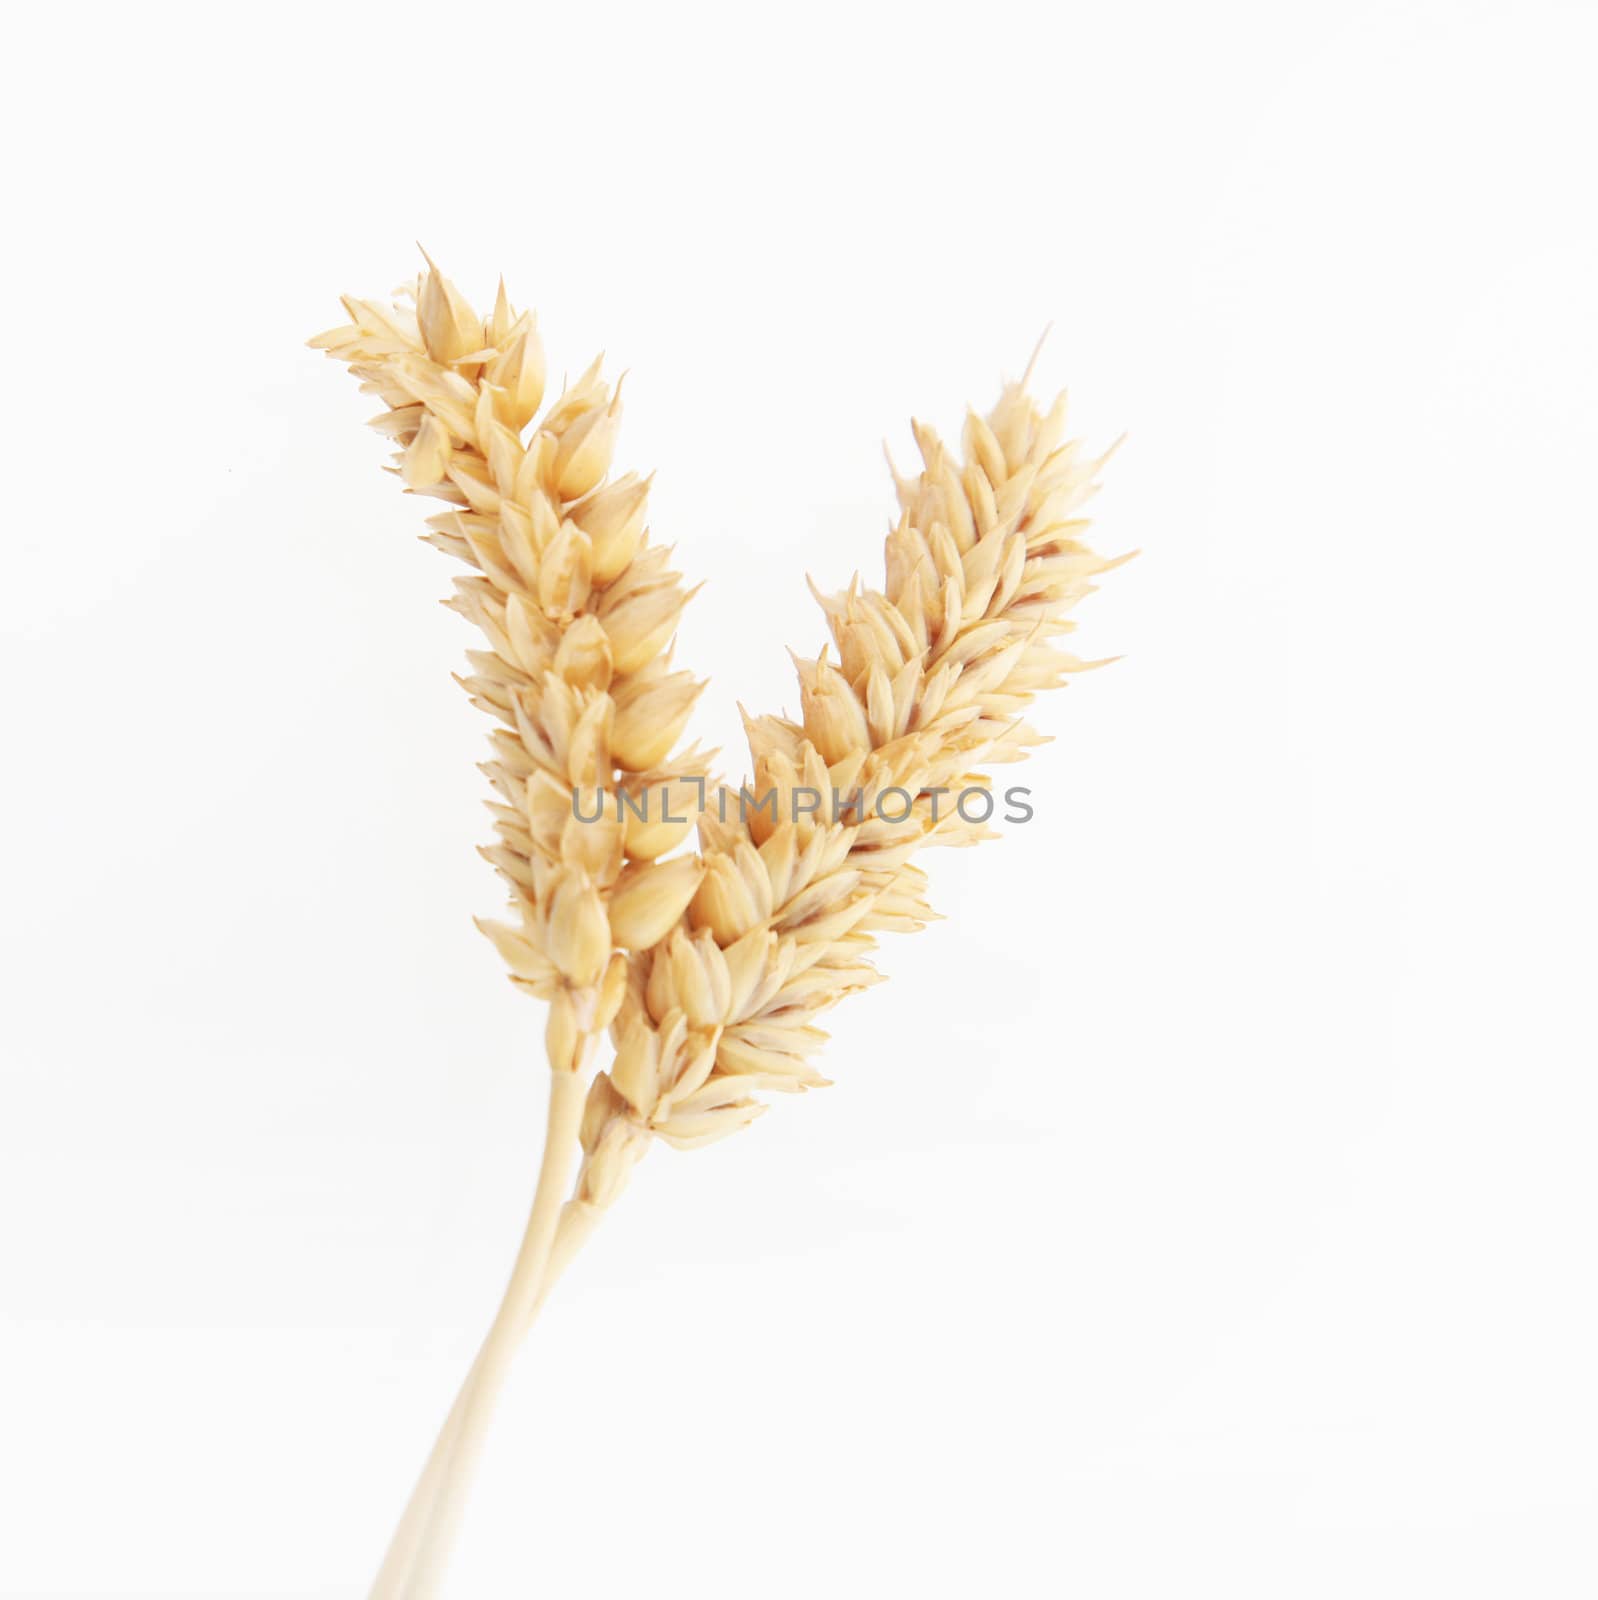 Ears Of Ripe Wheat by Farina6000